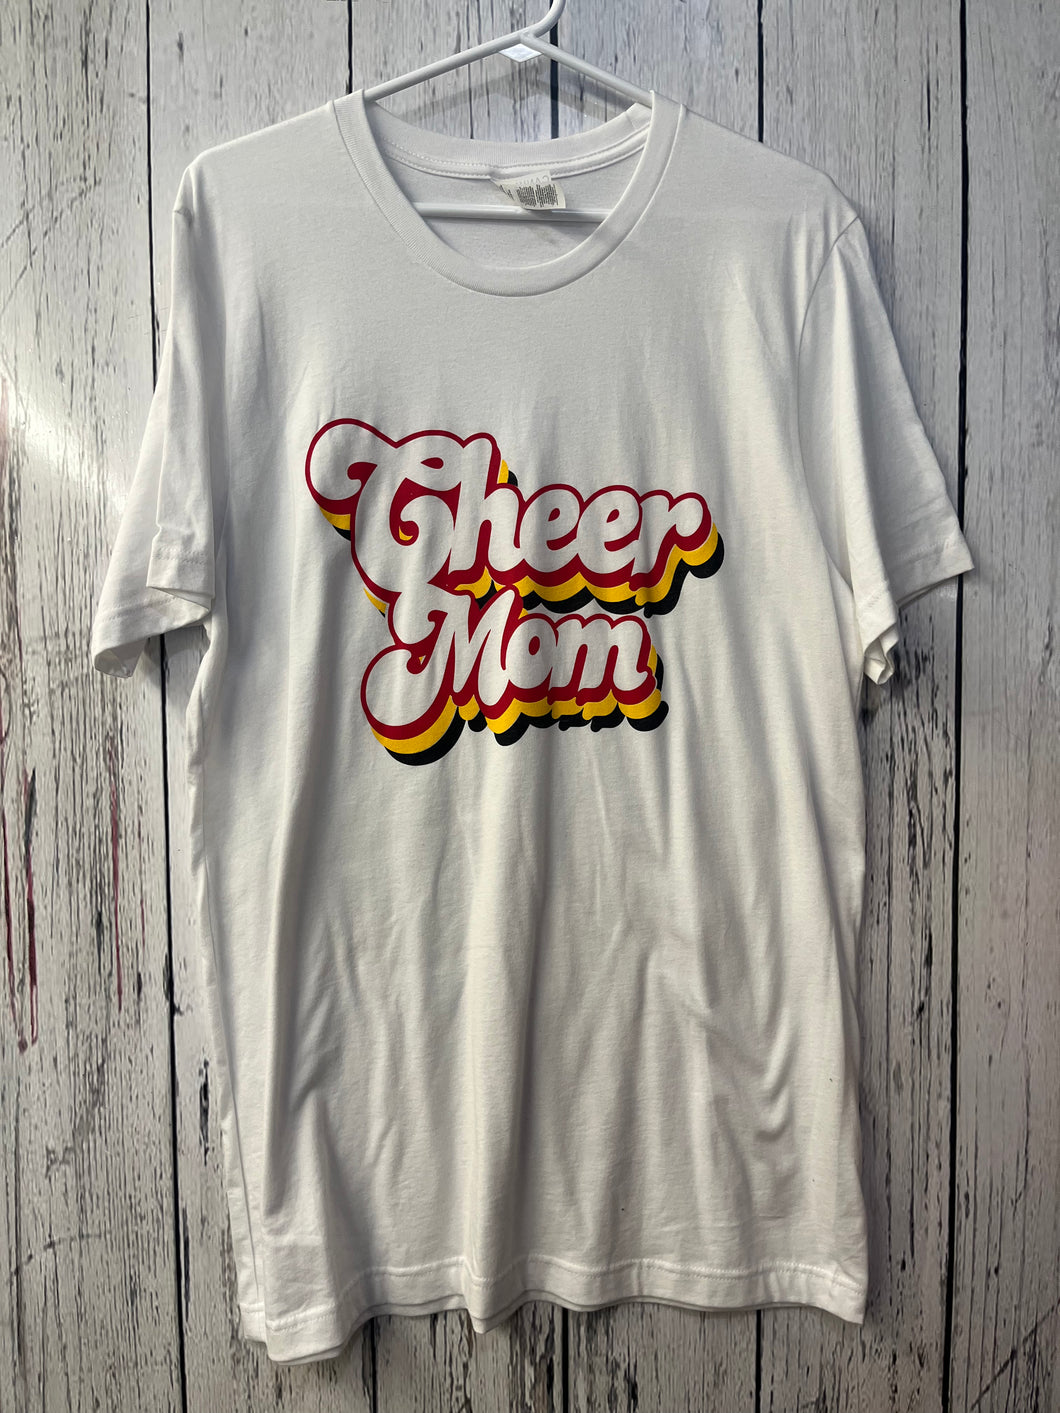 Cheer Mom t-shirt